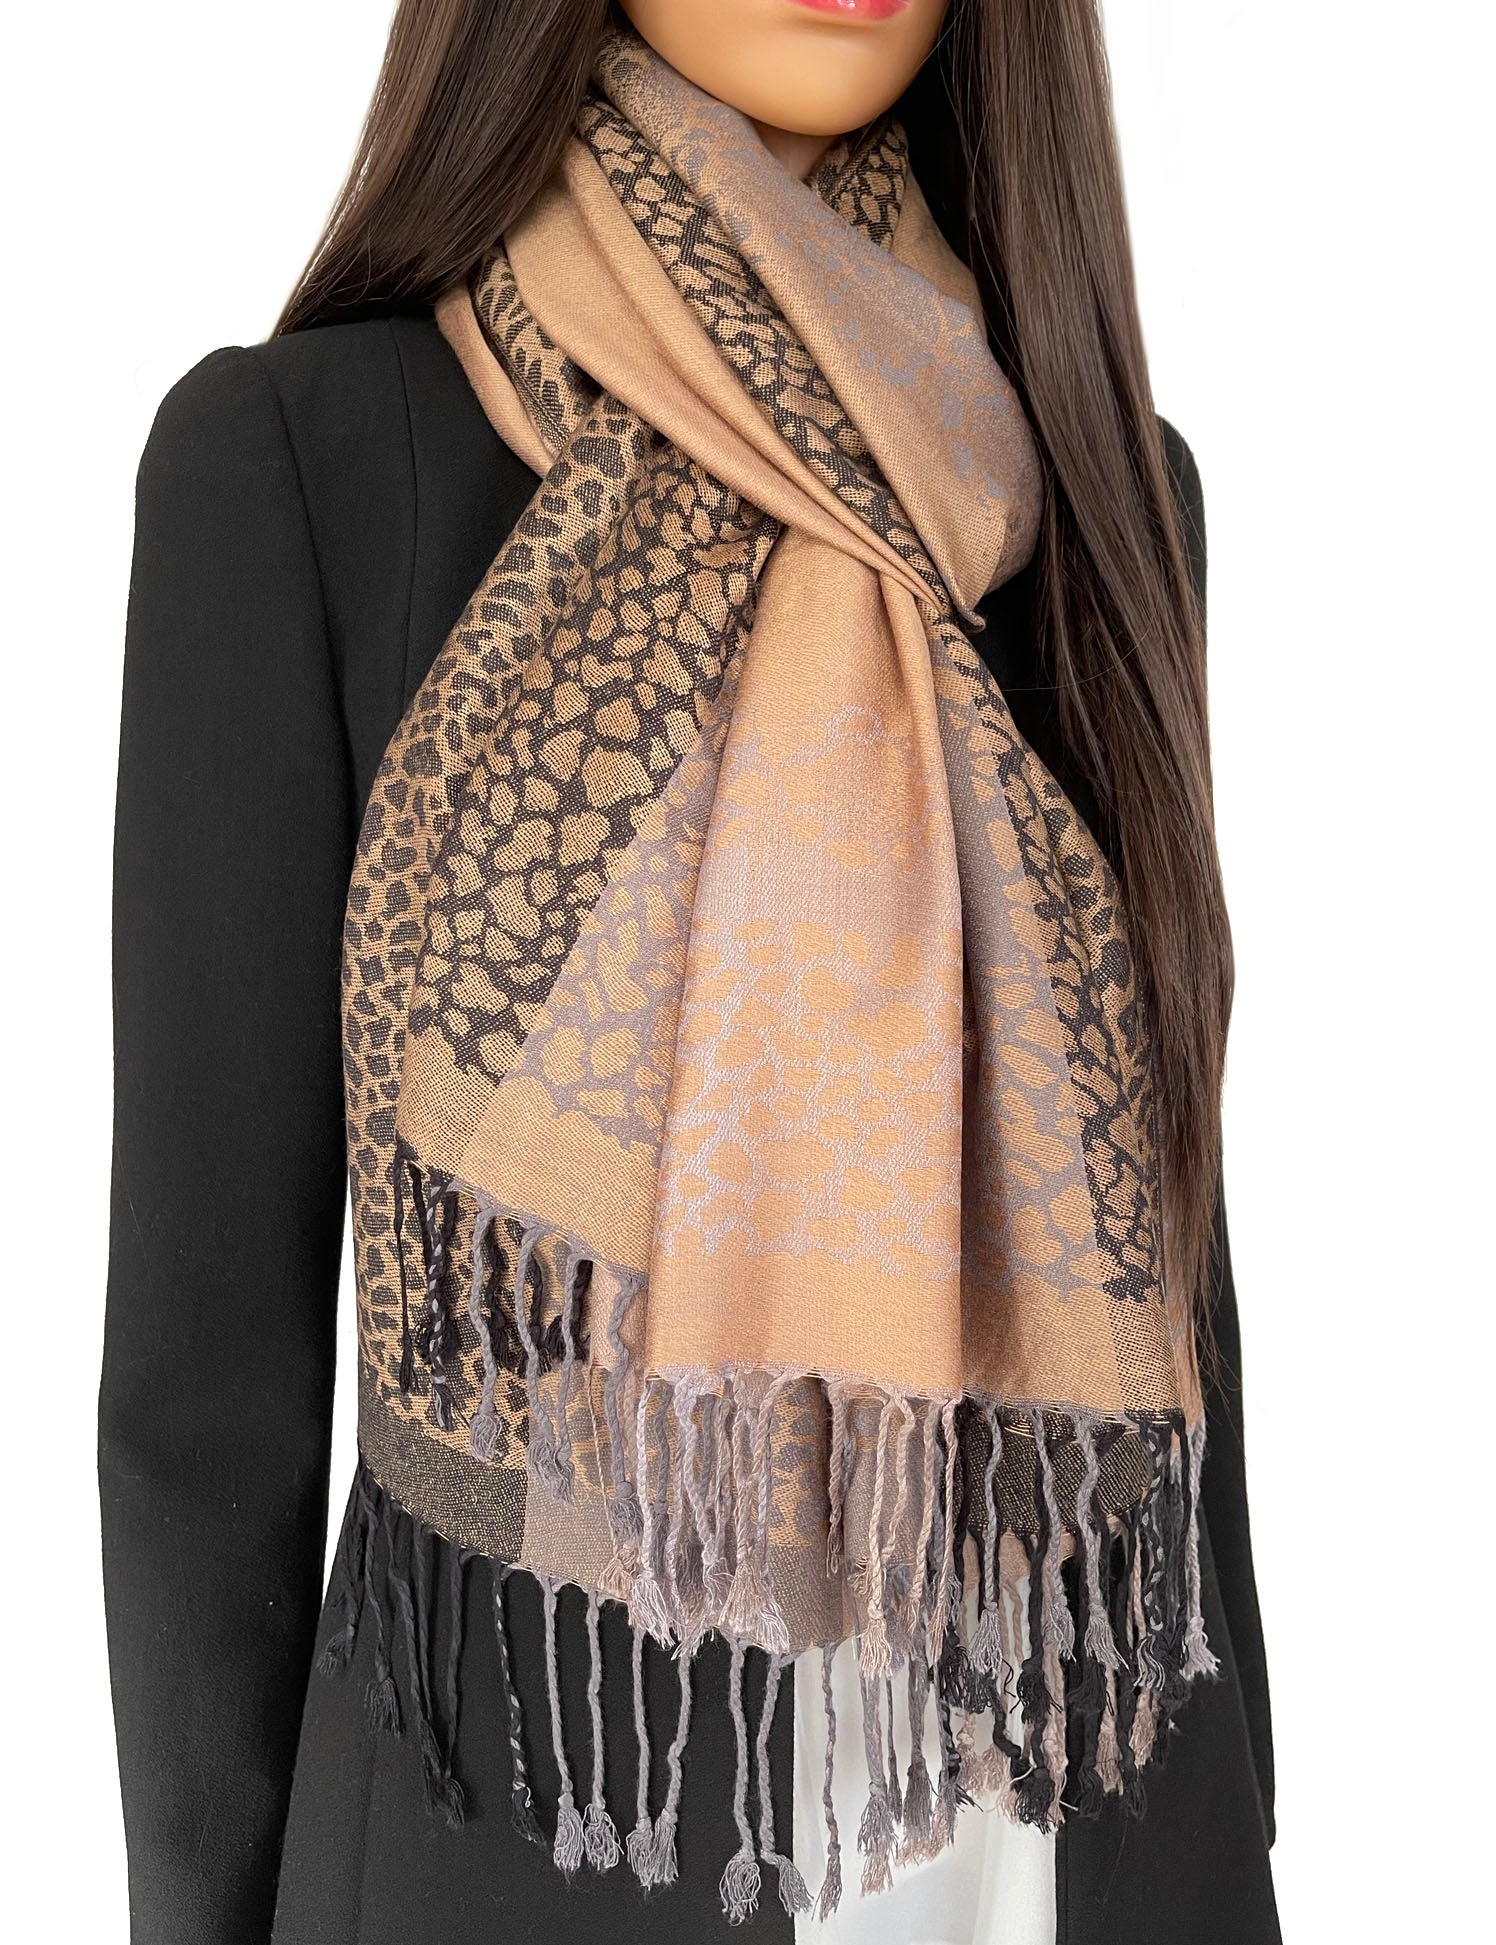 Louis Vuitton Monogram double sided cashmere shawl